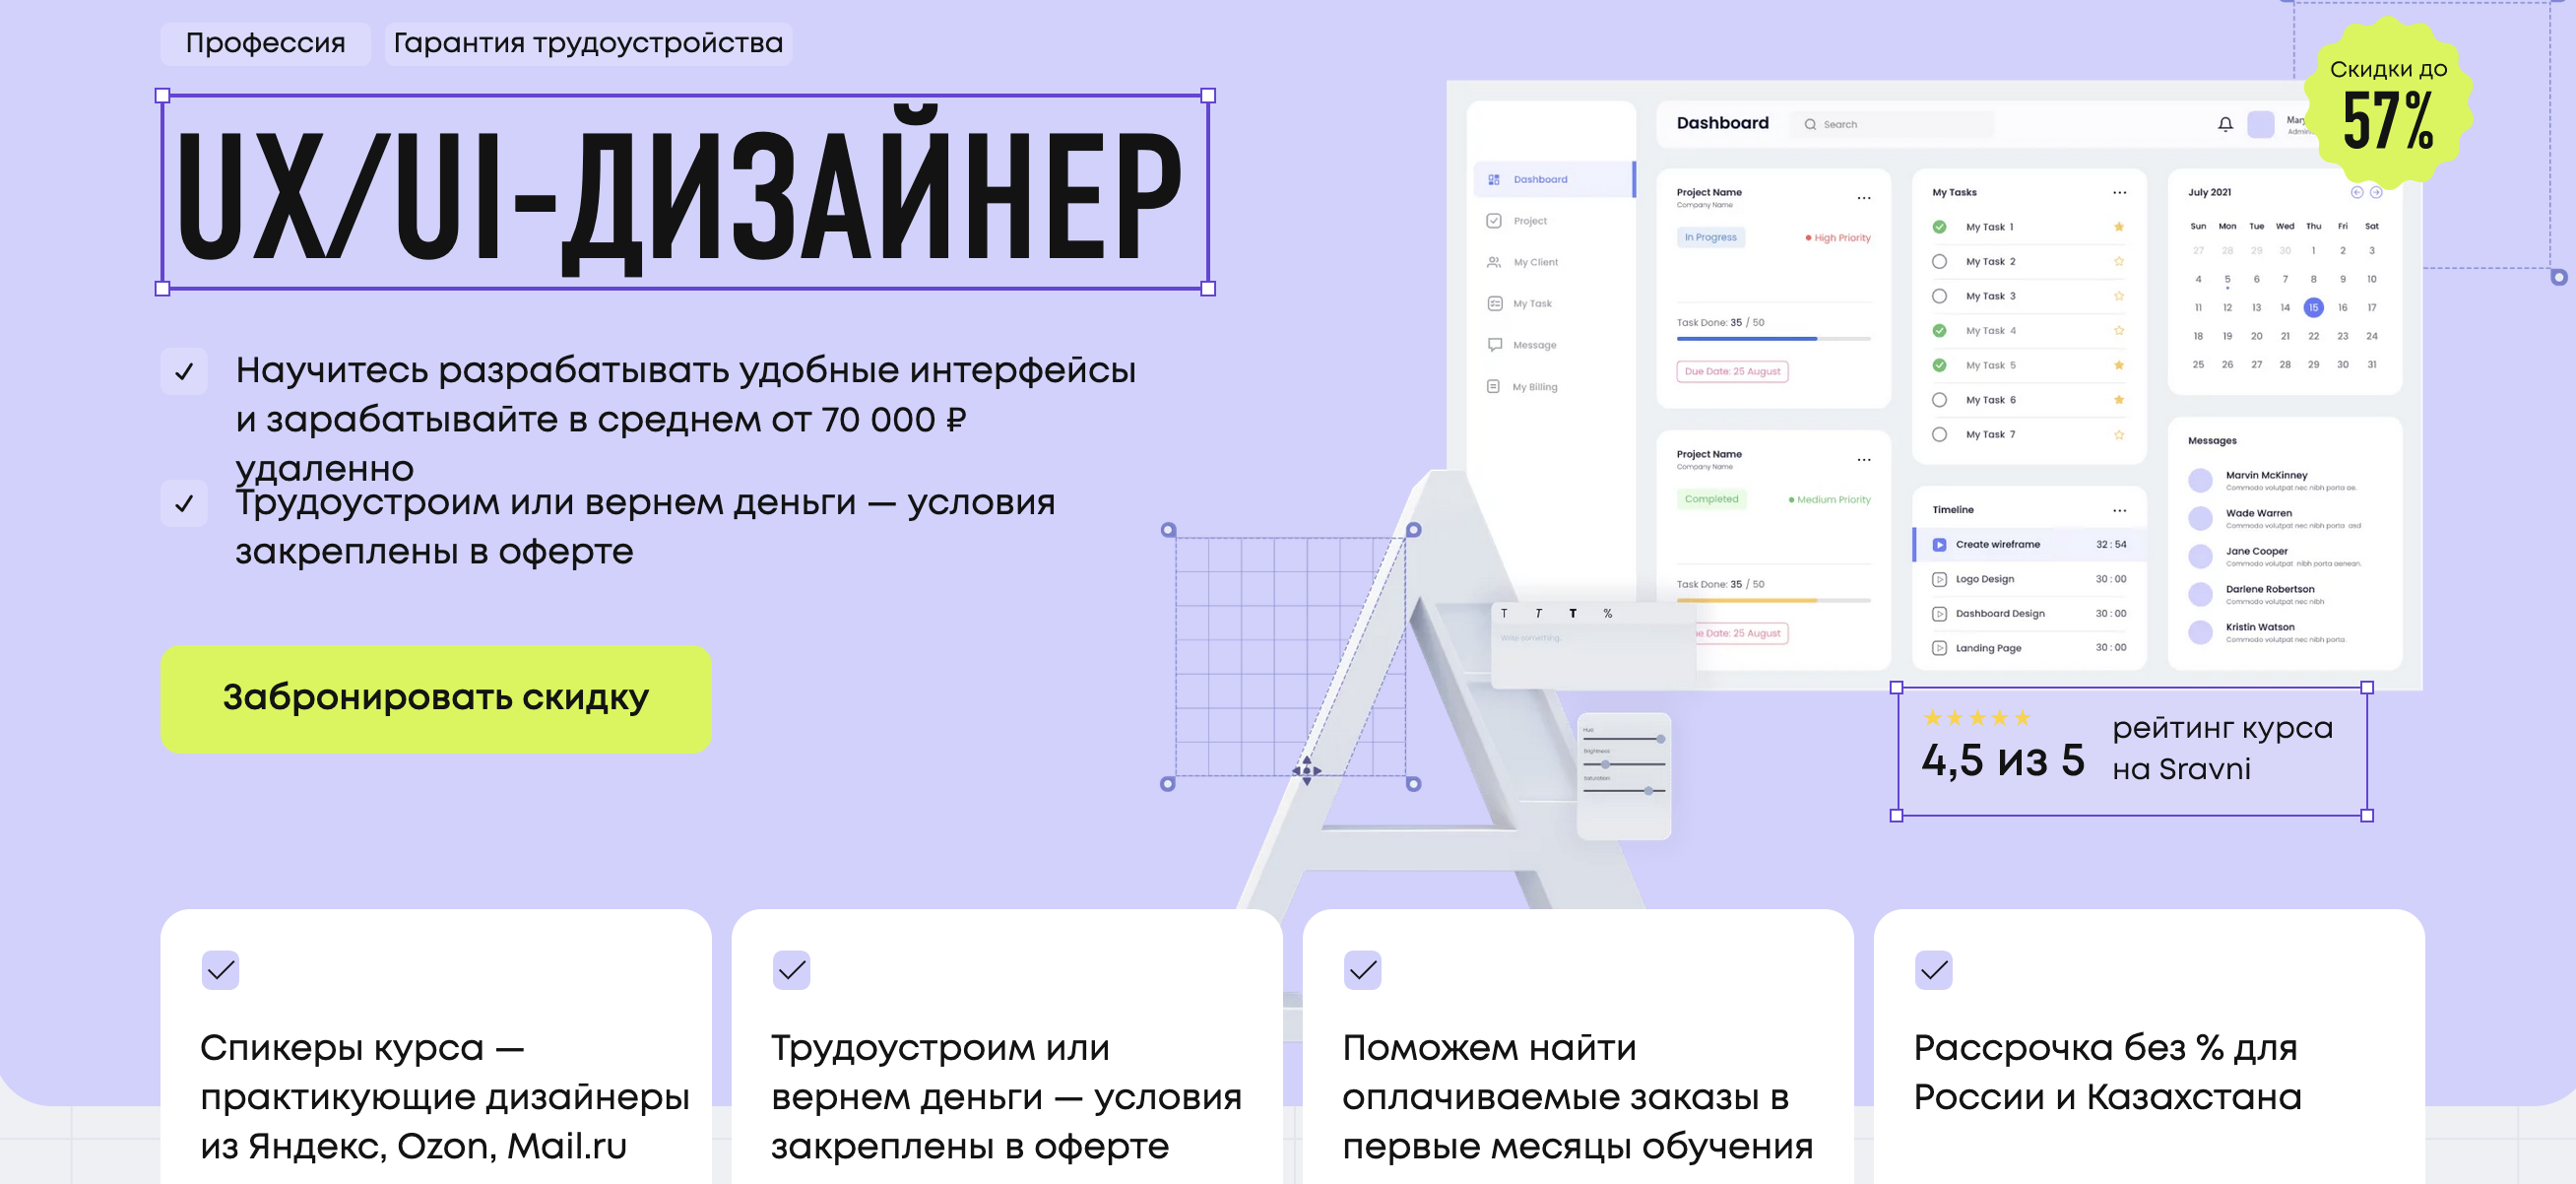 “UX/UI-дизайнер” от Productstar